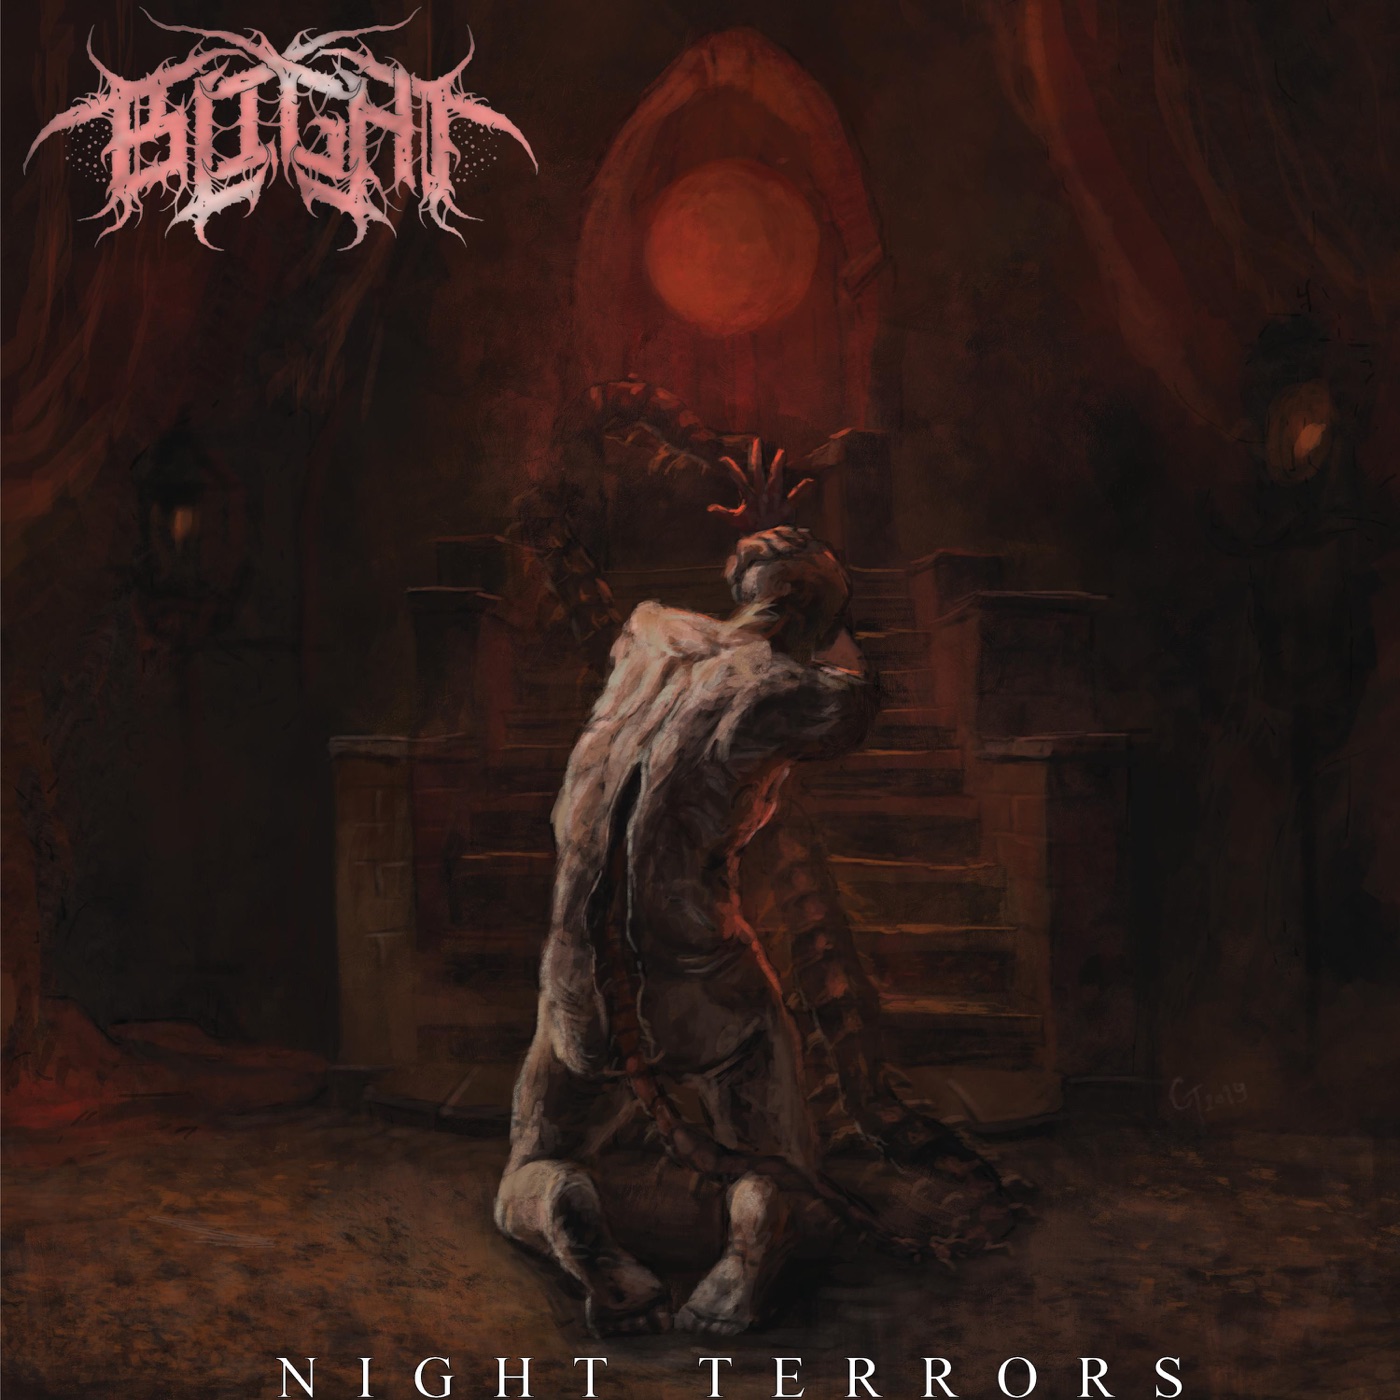 Blight - Night Terrors [EP] (2019)